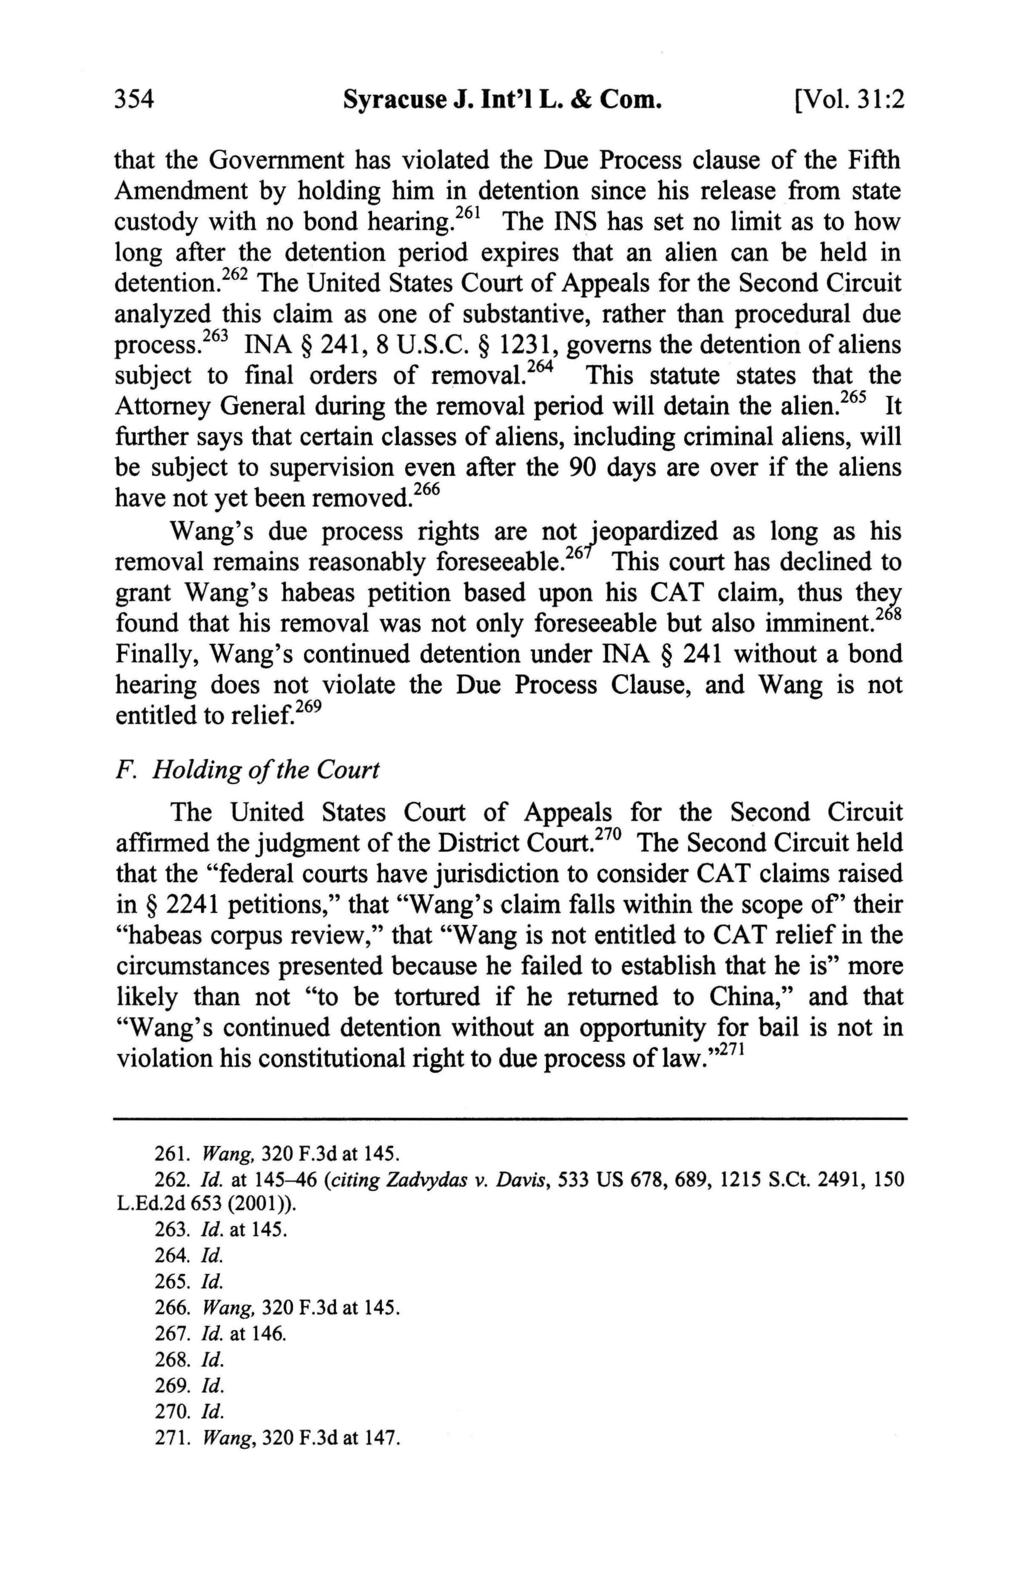 Syracuse Journal of International Law and Commerce, Vol. 31, No. 2 [2004], Art. 13 354 Syracuse J. Int'I L. & Com. [Vol.